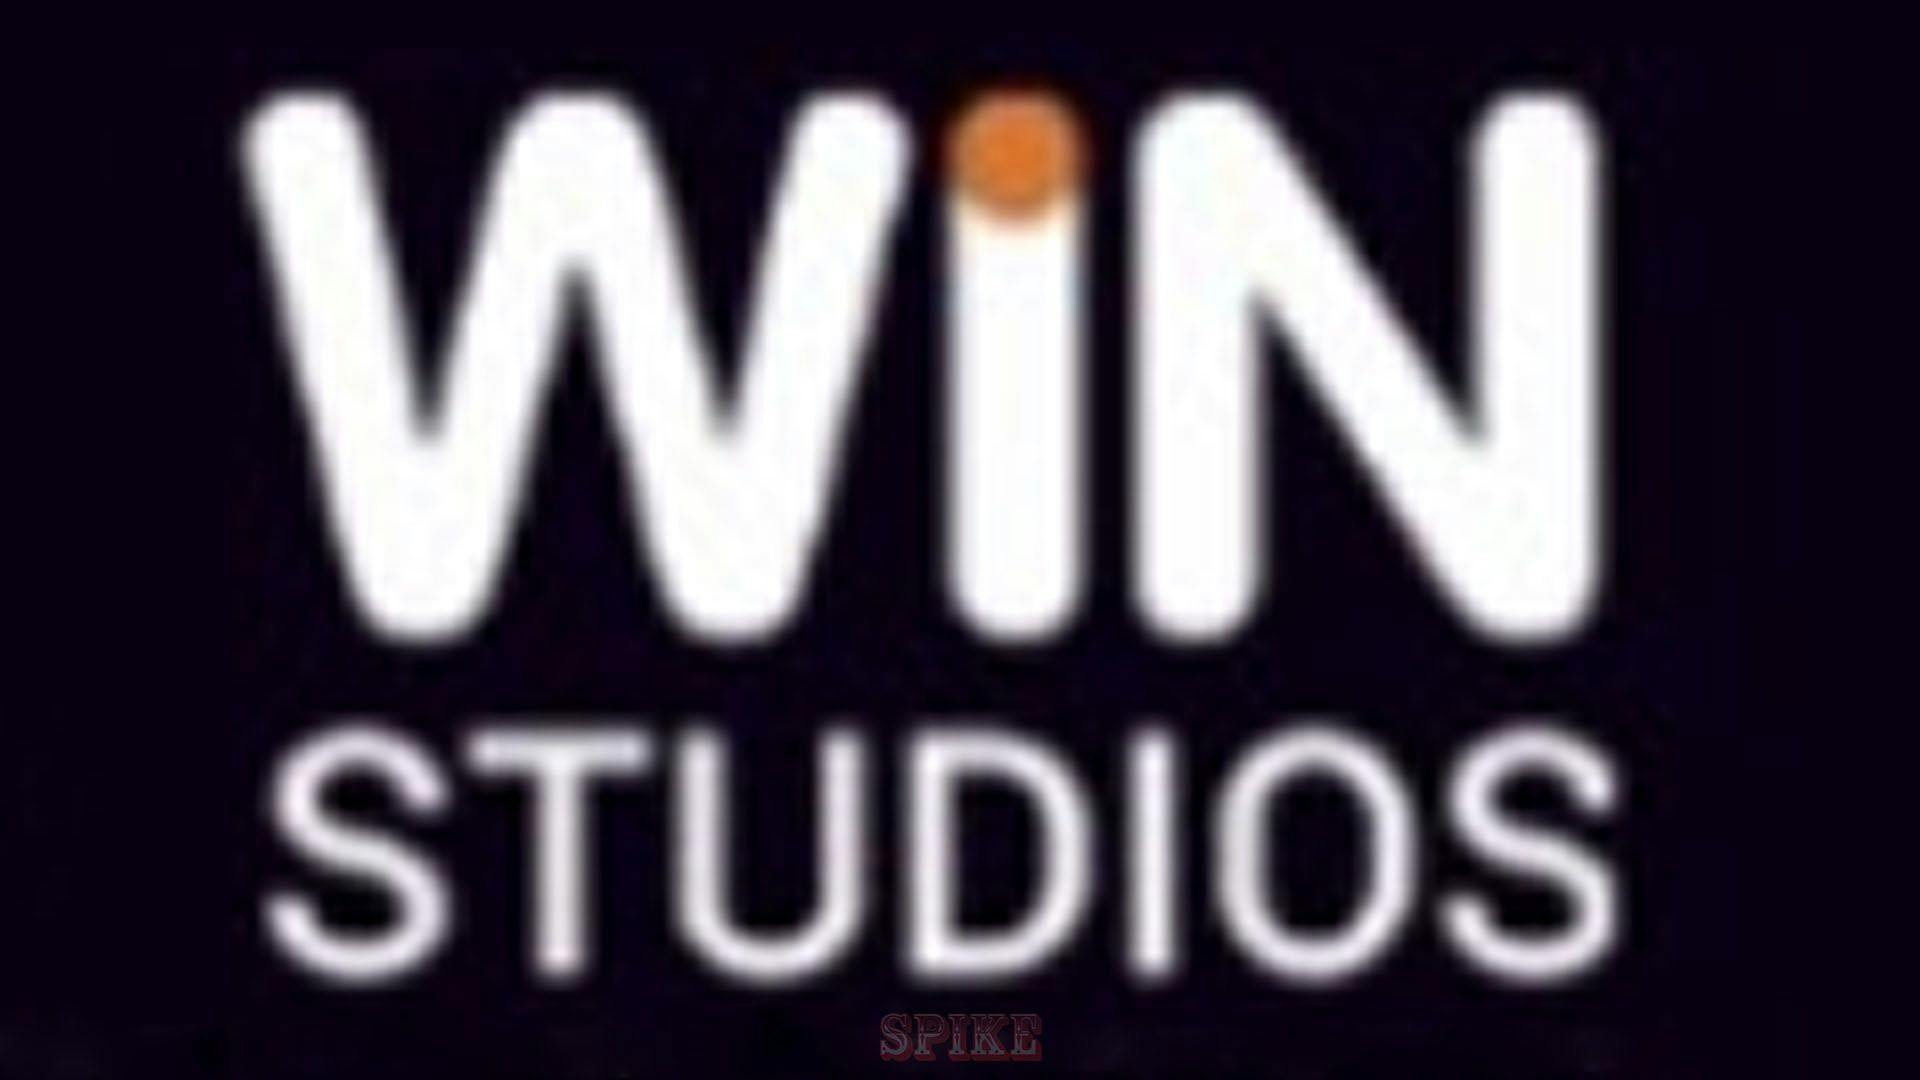 Win Studios Software Provider Free Slots